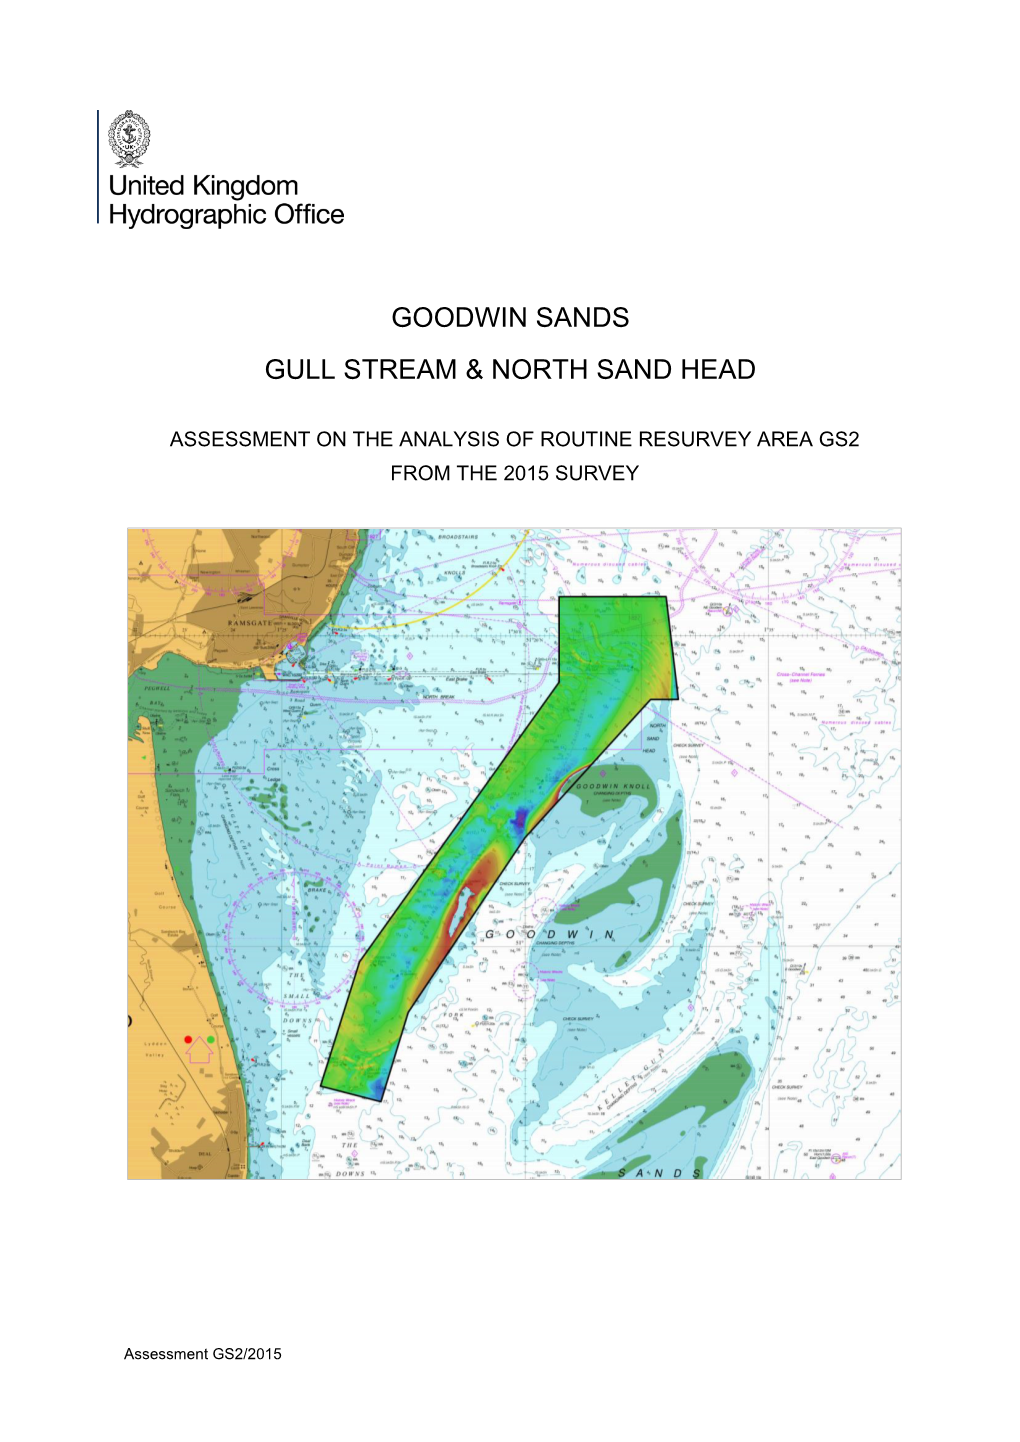 Goodwin Sands Gull Stream & North Sand Head